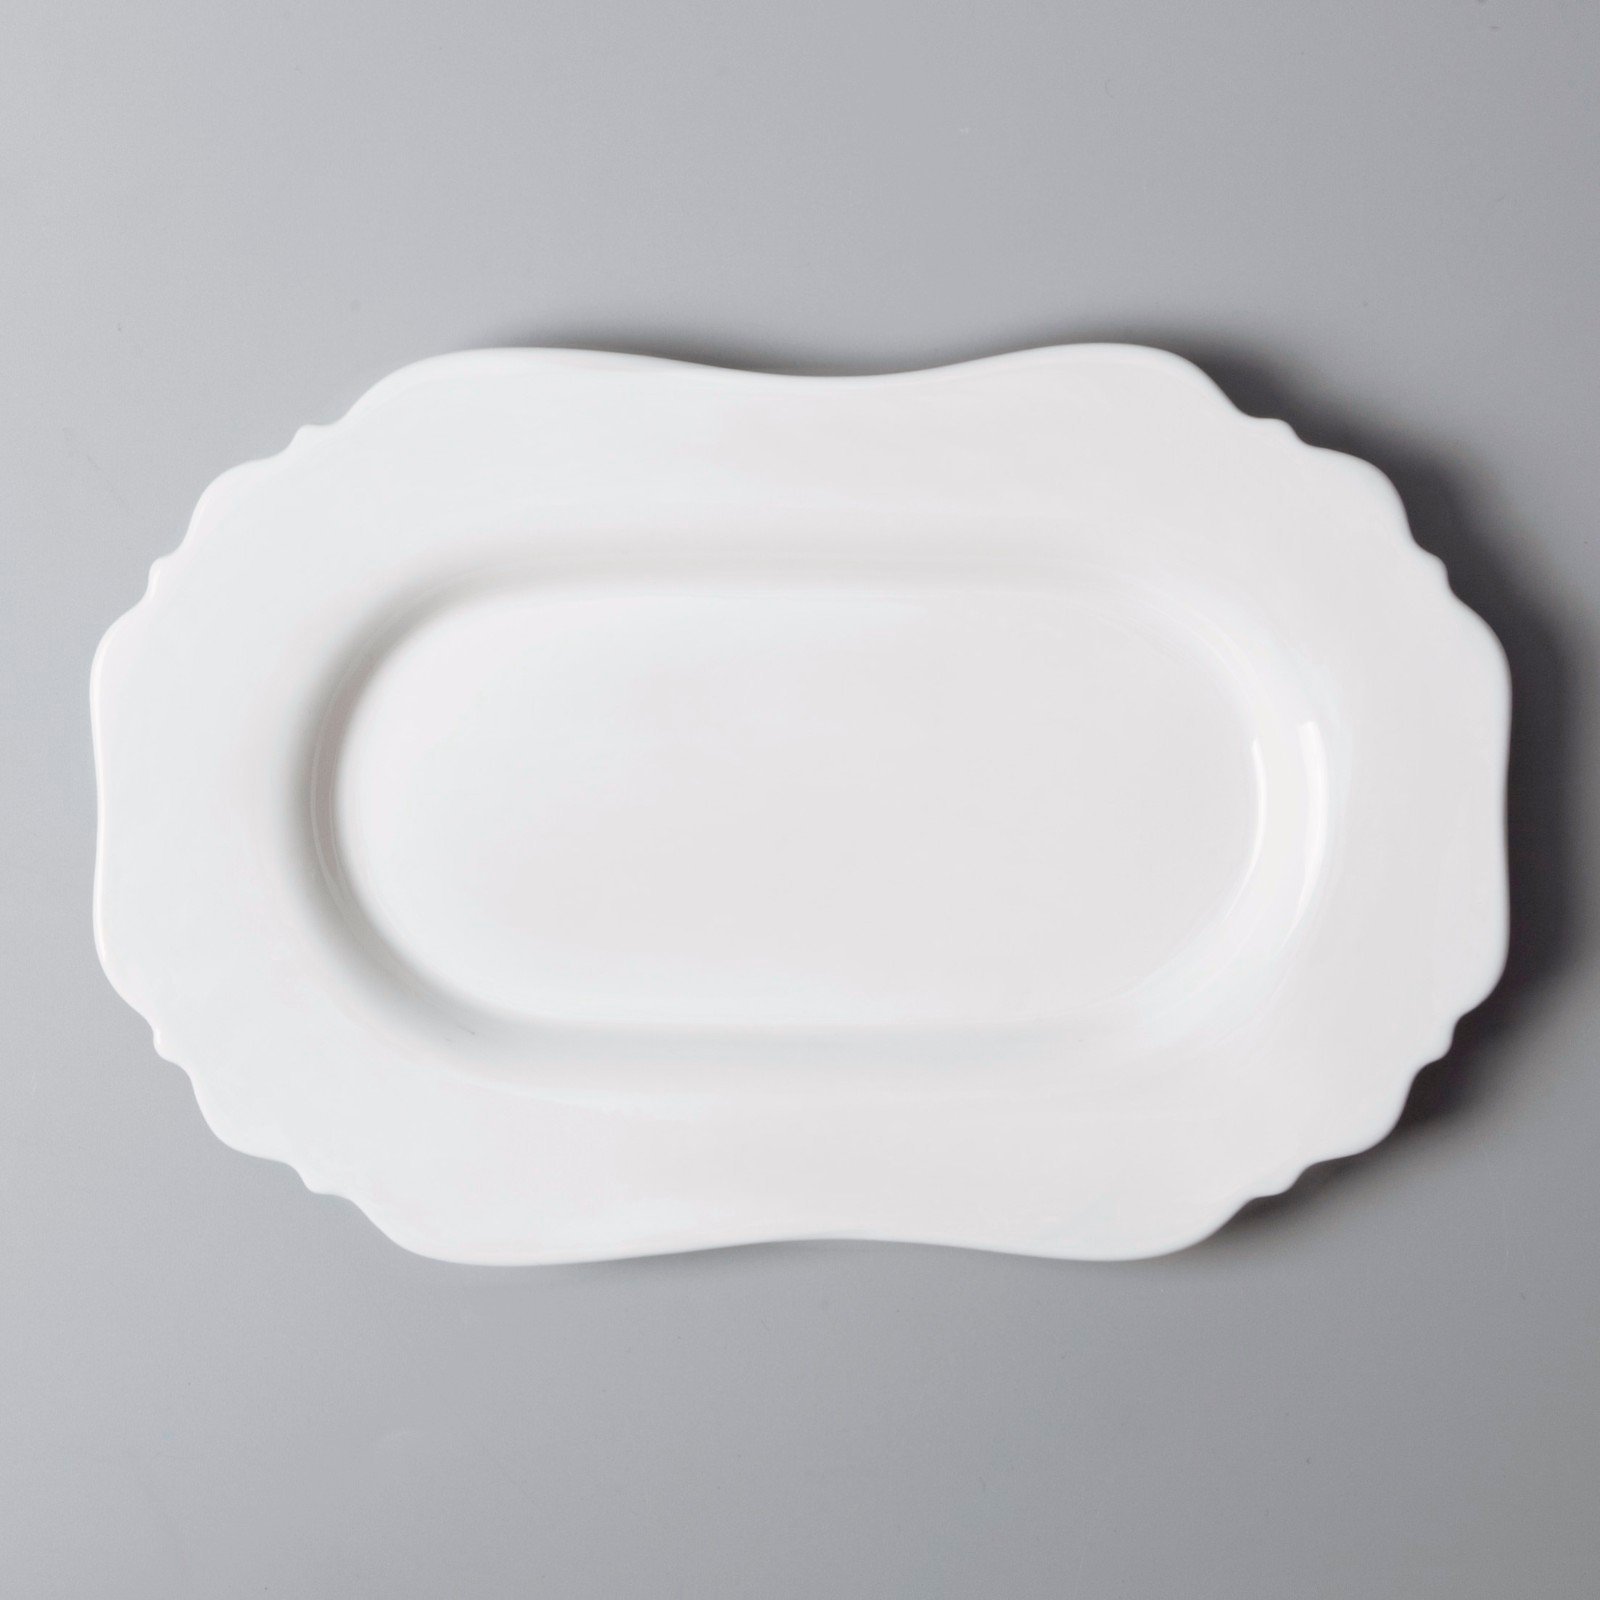 Two Eight Brand sample glaze plate white porcelain tableware